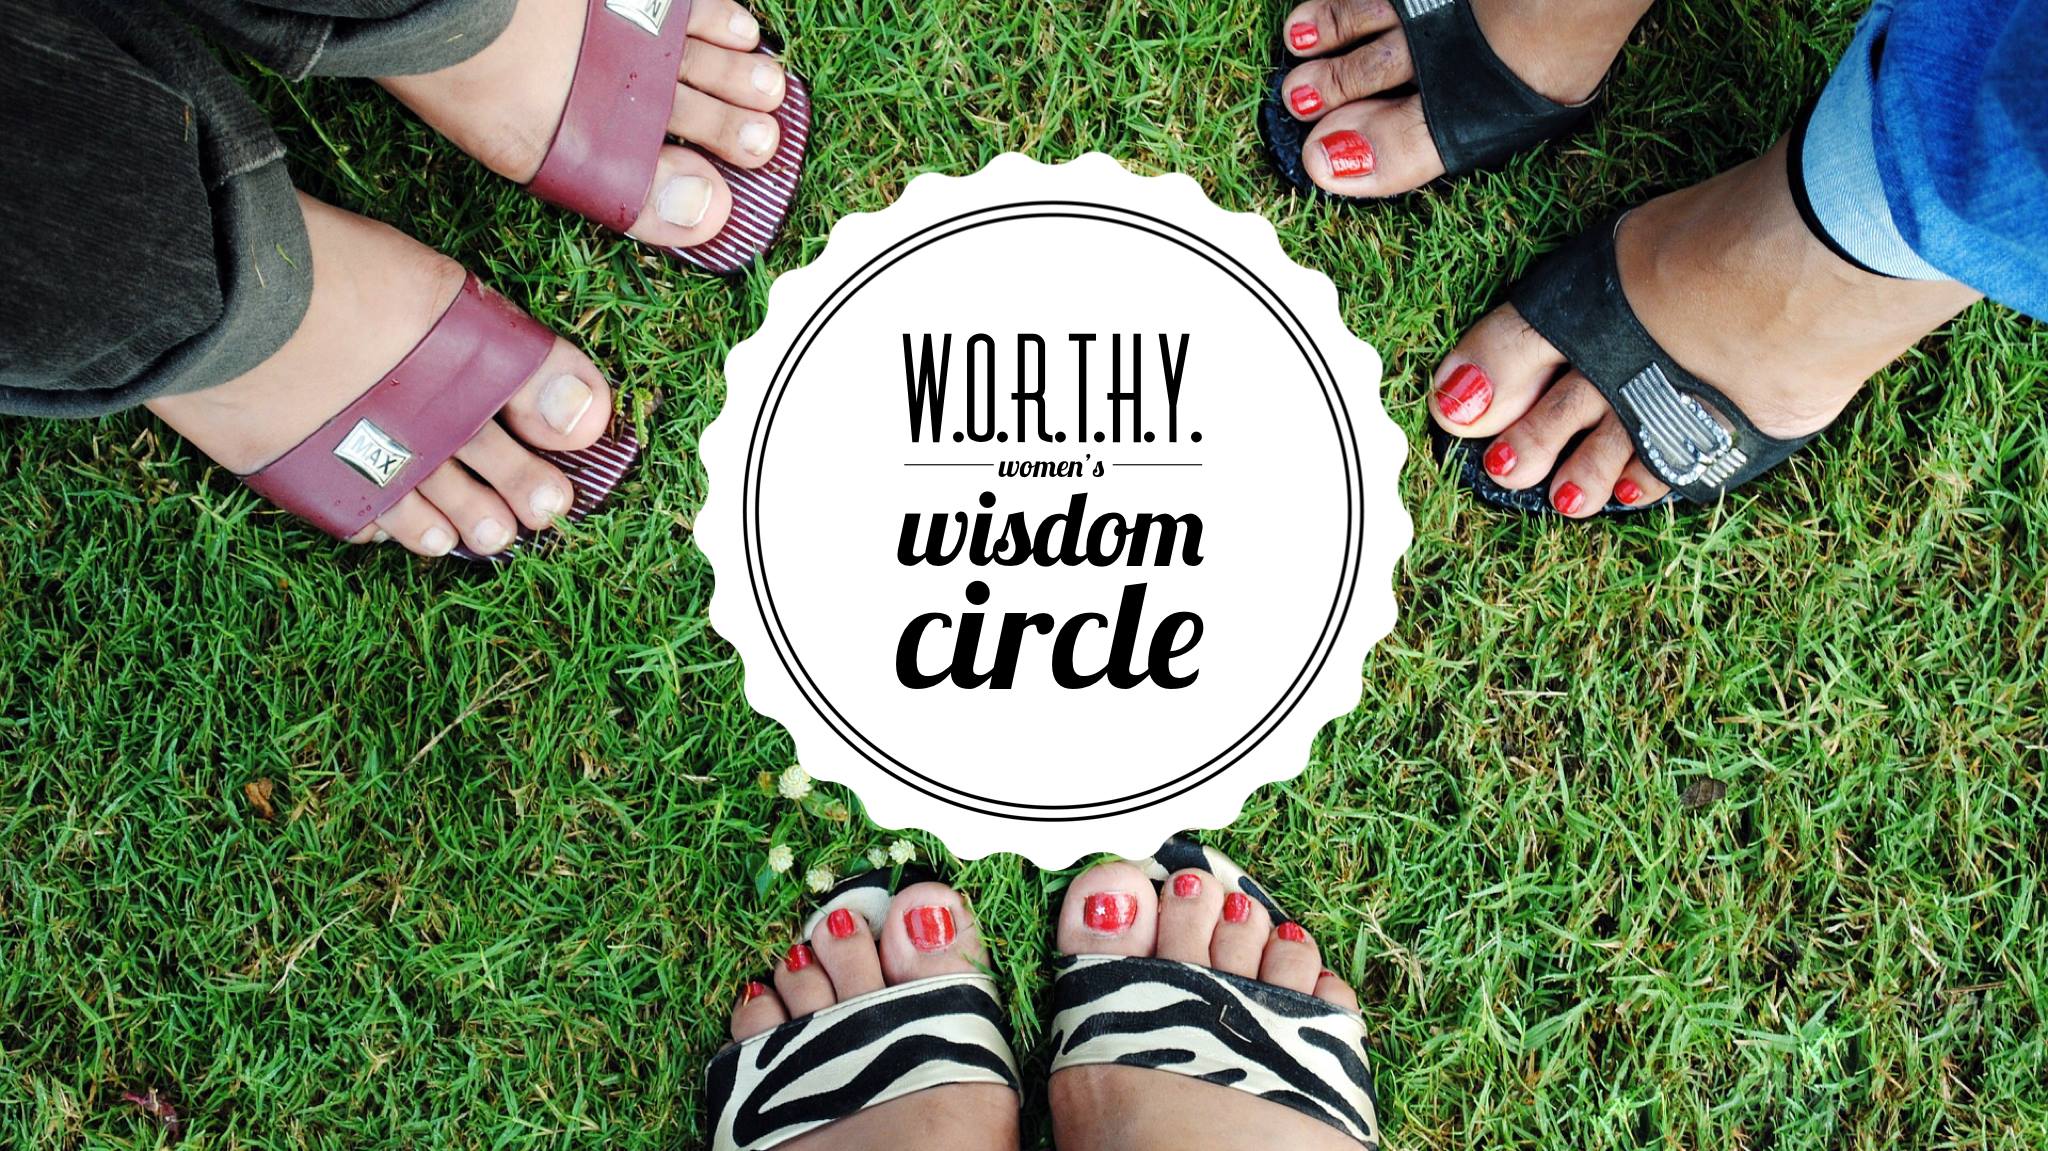 worthy womens wisdom circle graphic